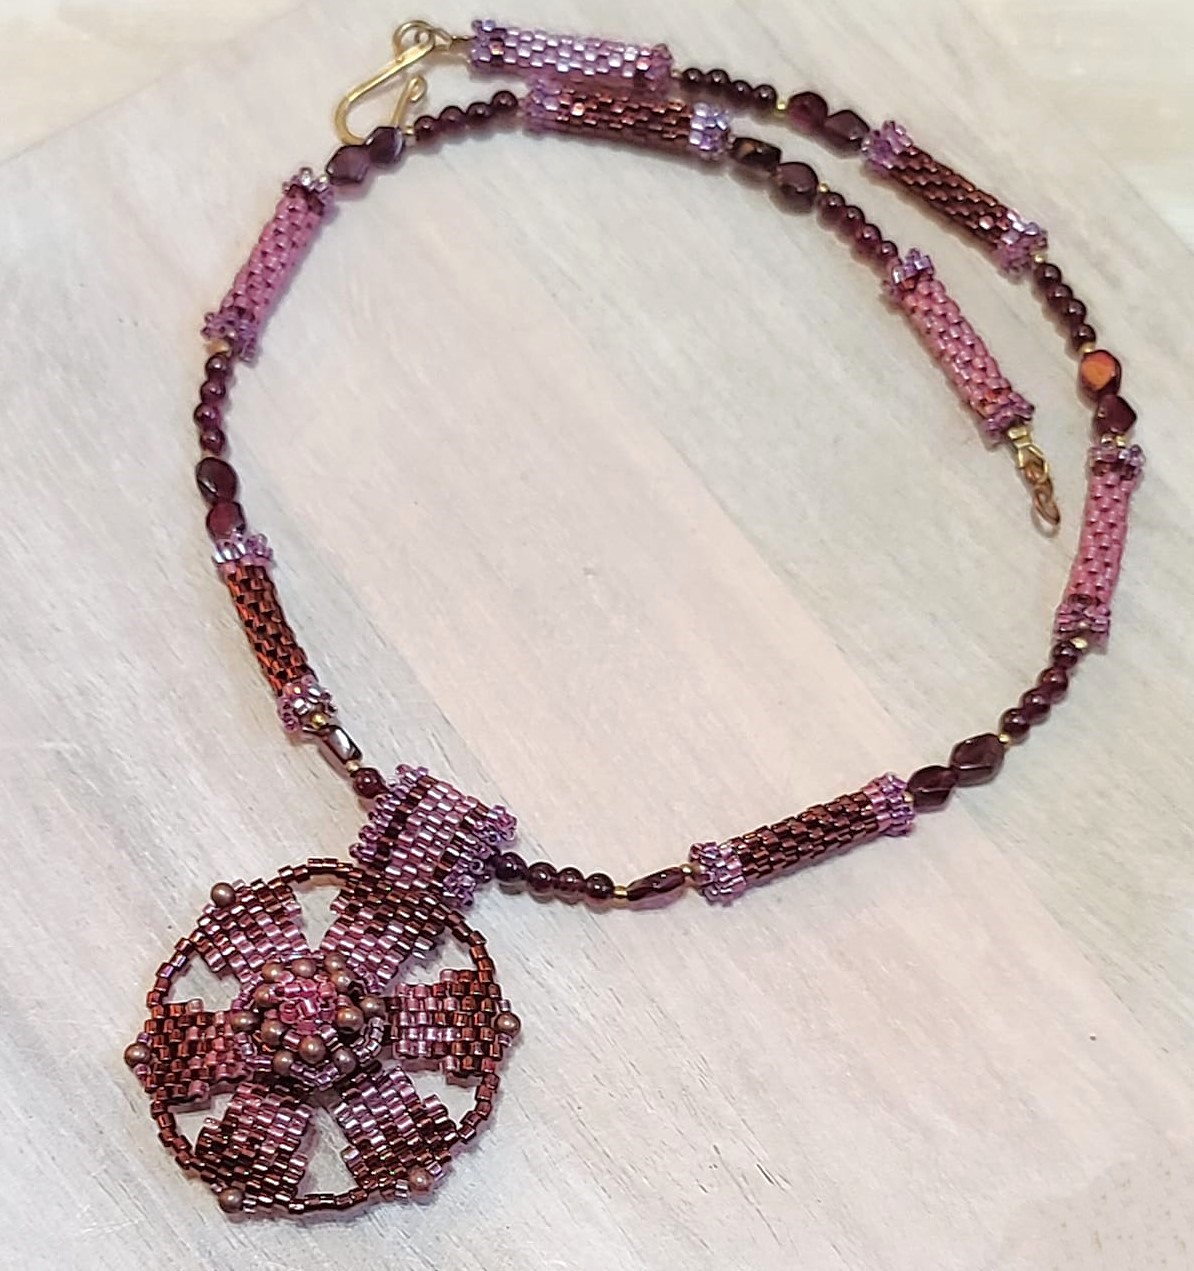 Garnet pendant necklace, center flower design with gems